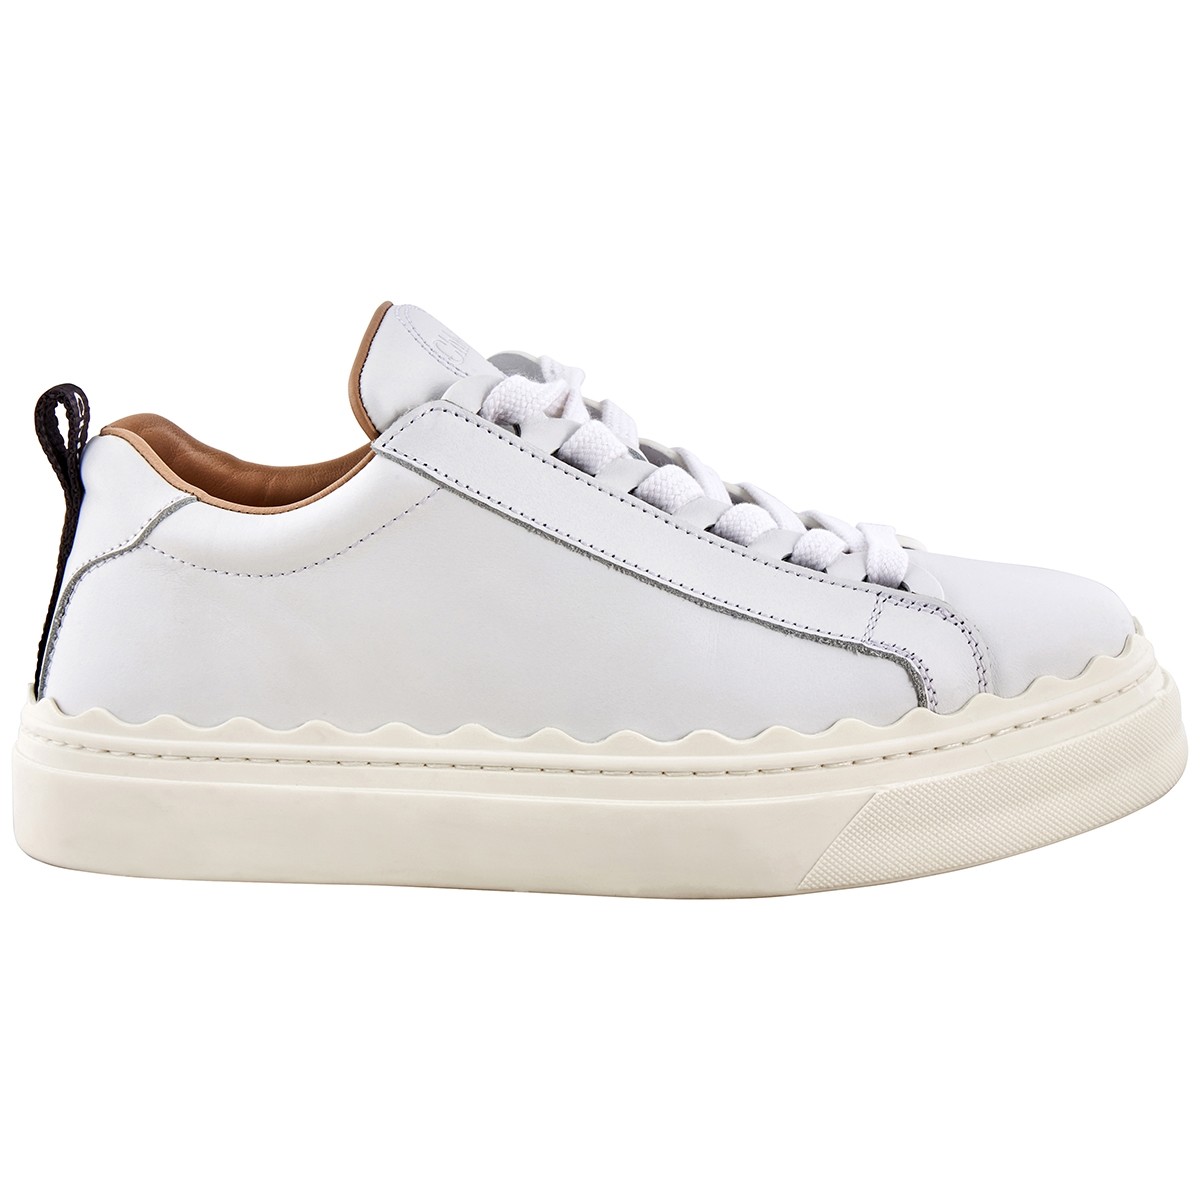 Chloe Lauren Sneakers in White S10842 101